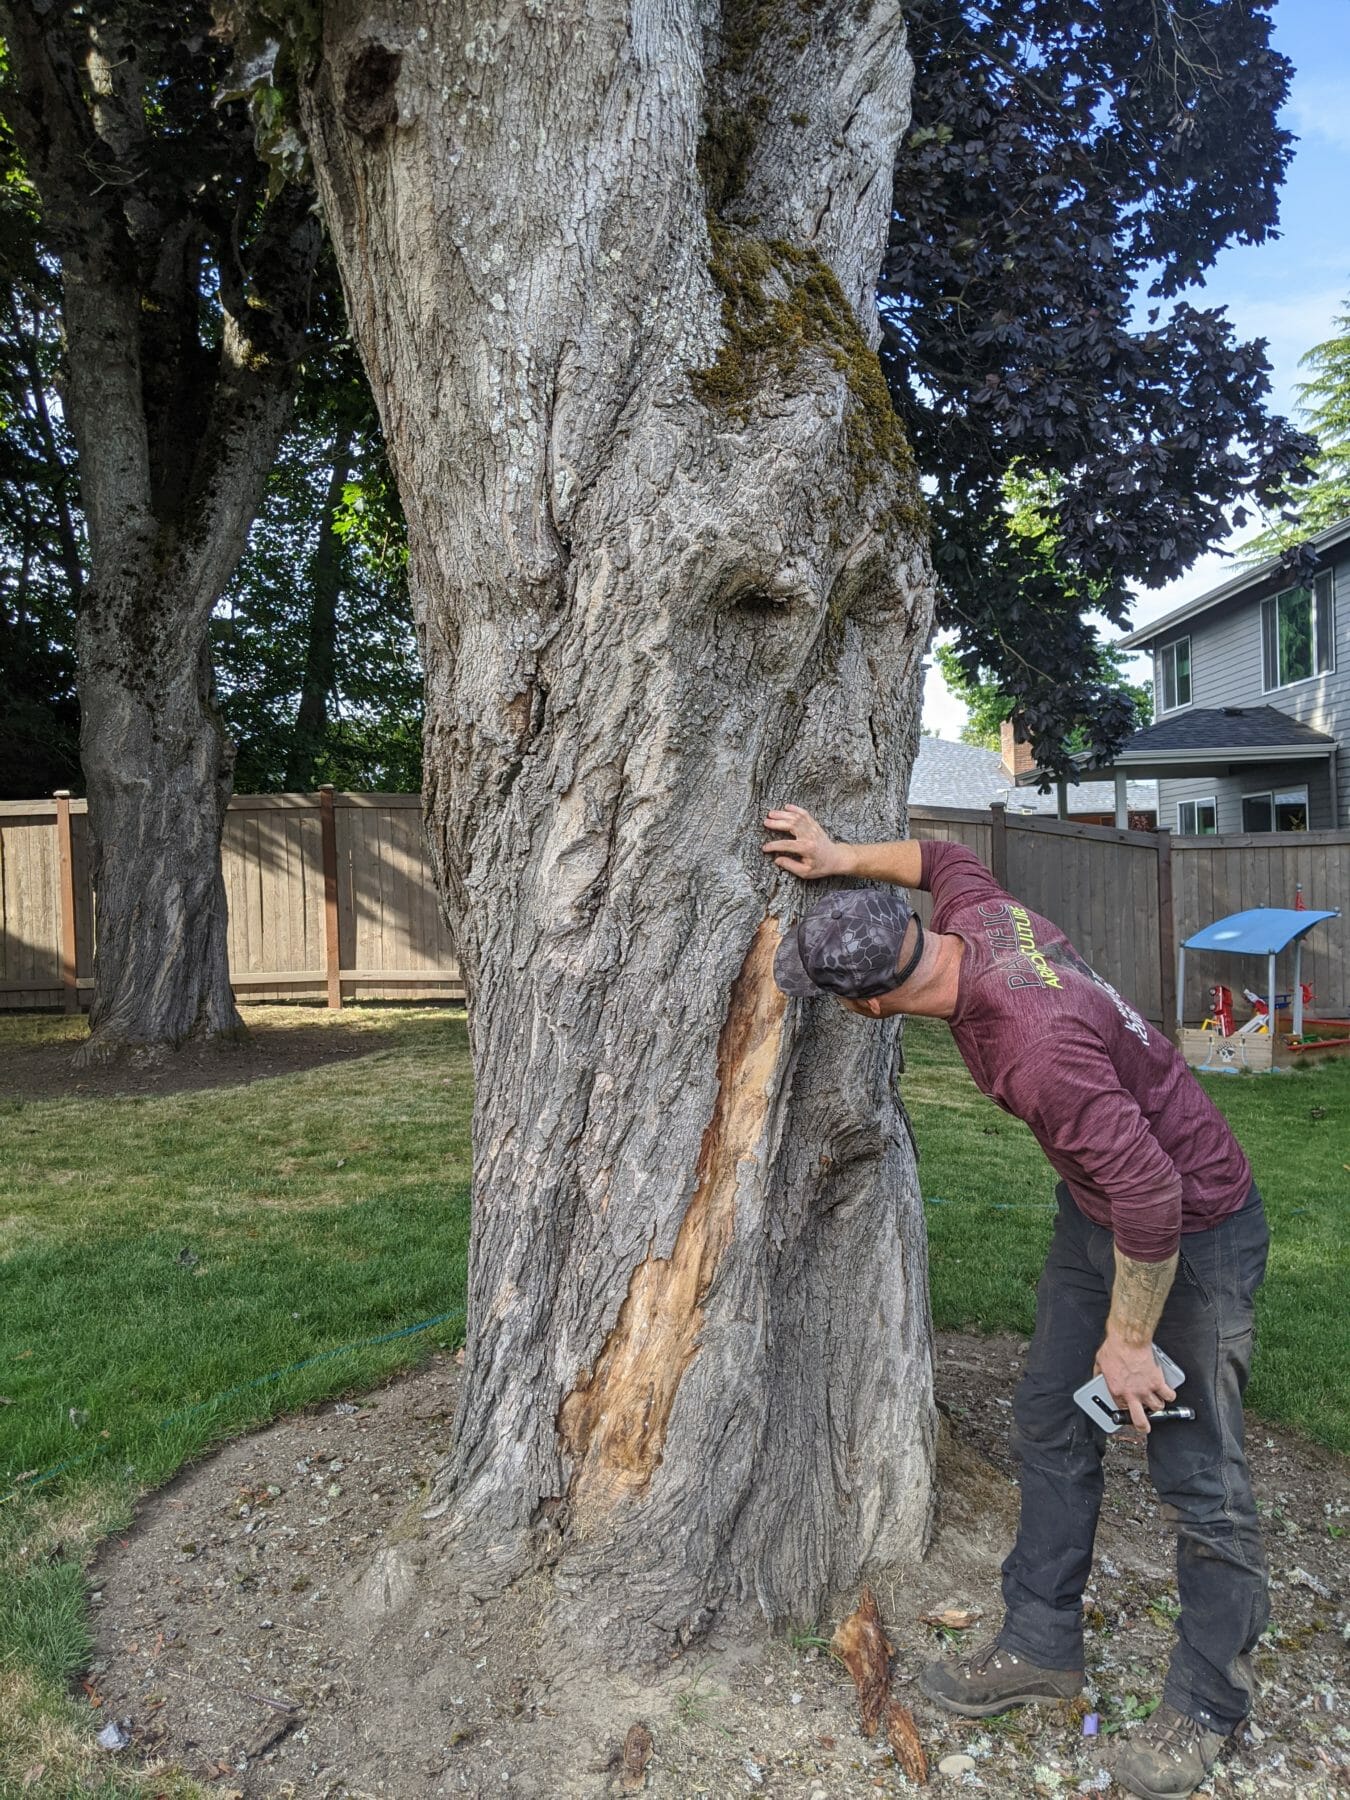 Professional arborist inspects tree